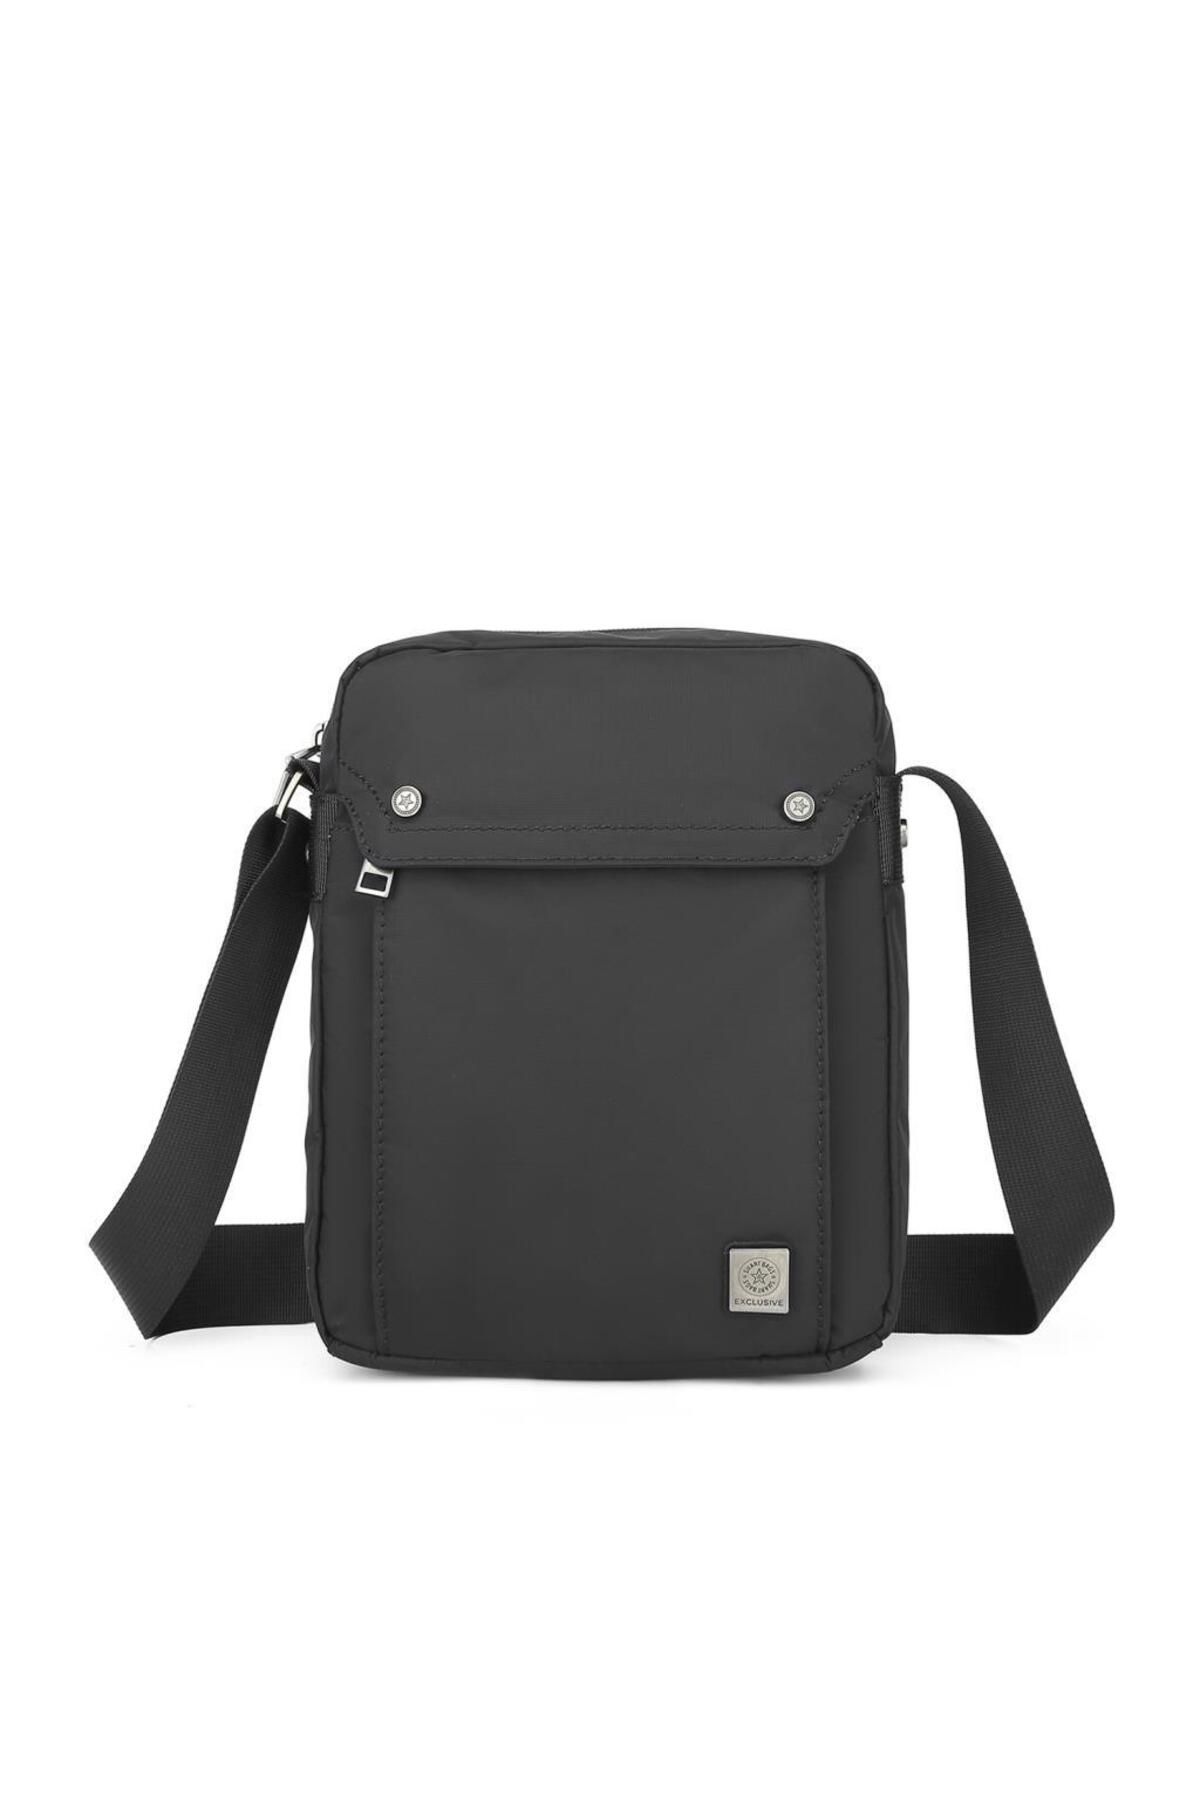 Smart Bags Exclusive Serisi Uniseks Postacı Çantası Smart Bags 8700